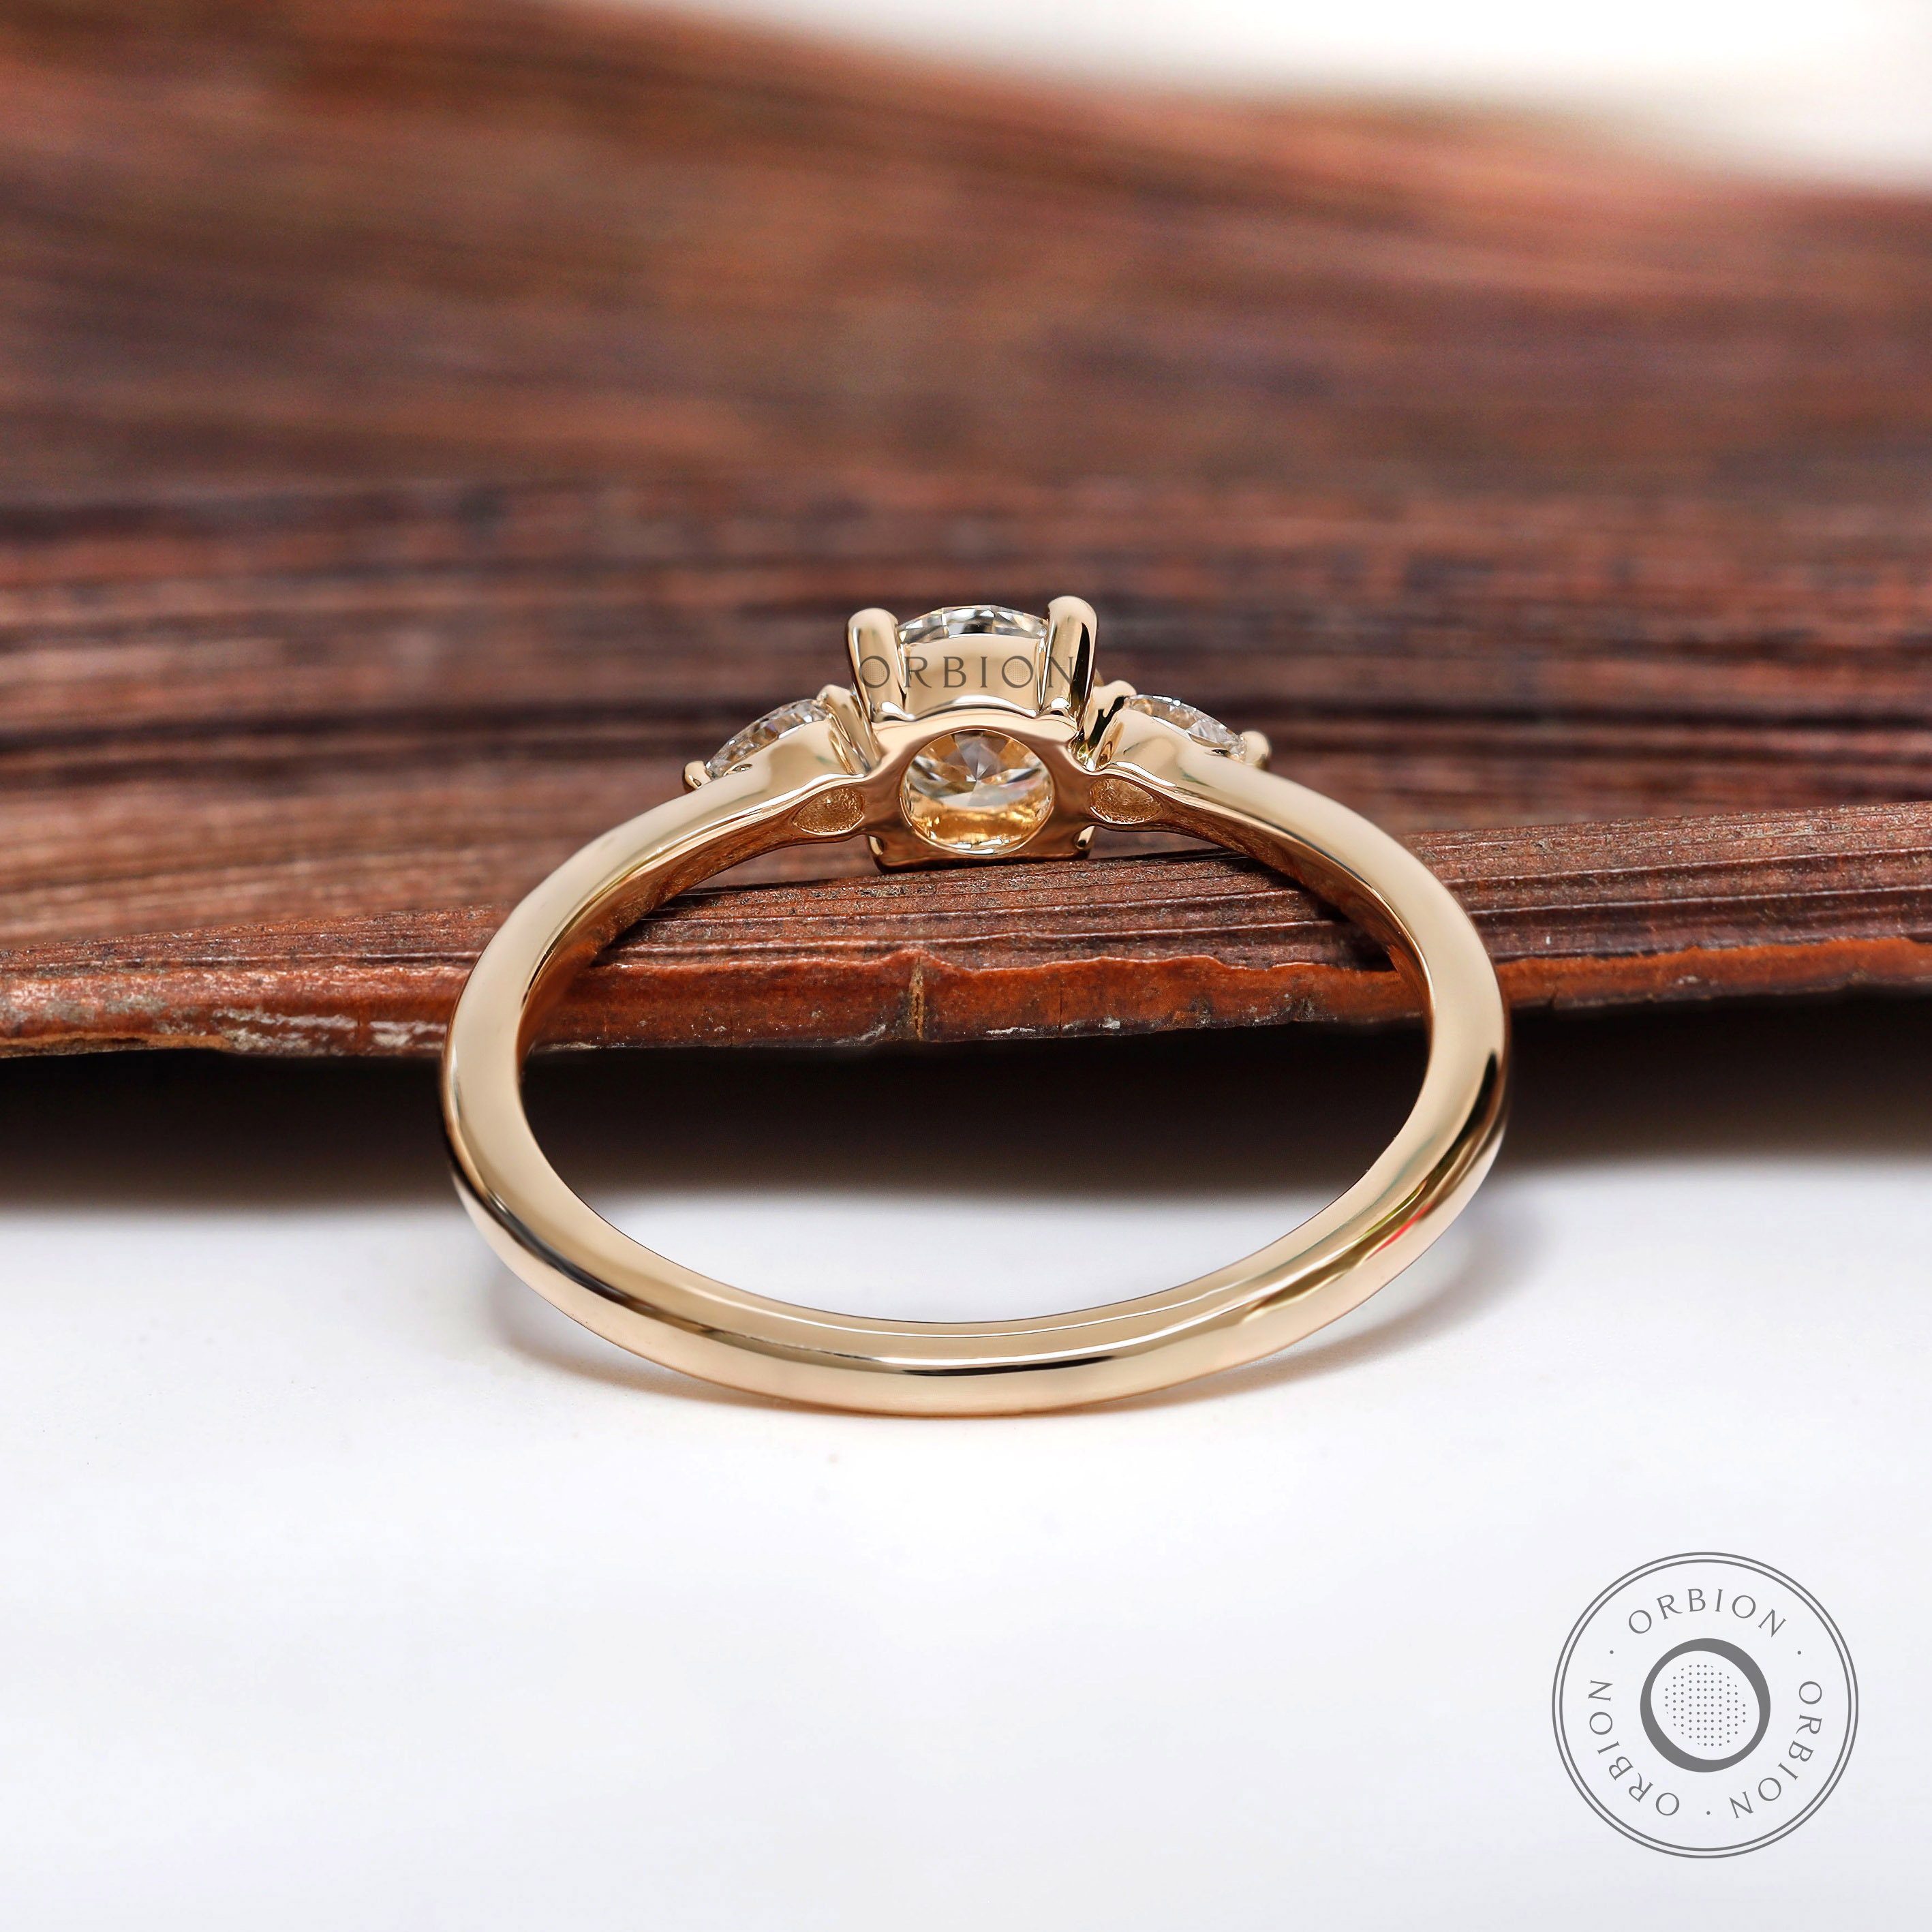 14K Gold Single Floating Diamond Ring – FERKOS FJ